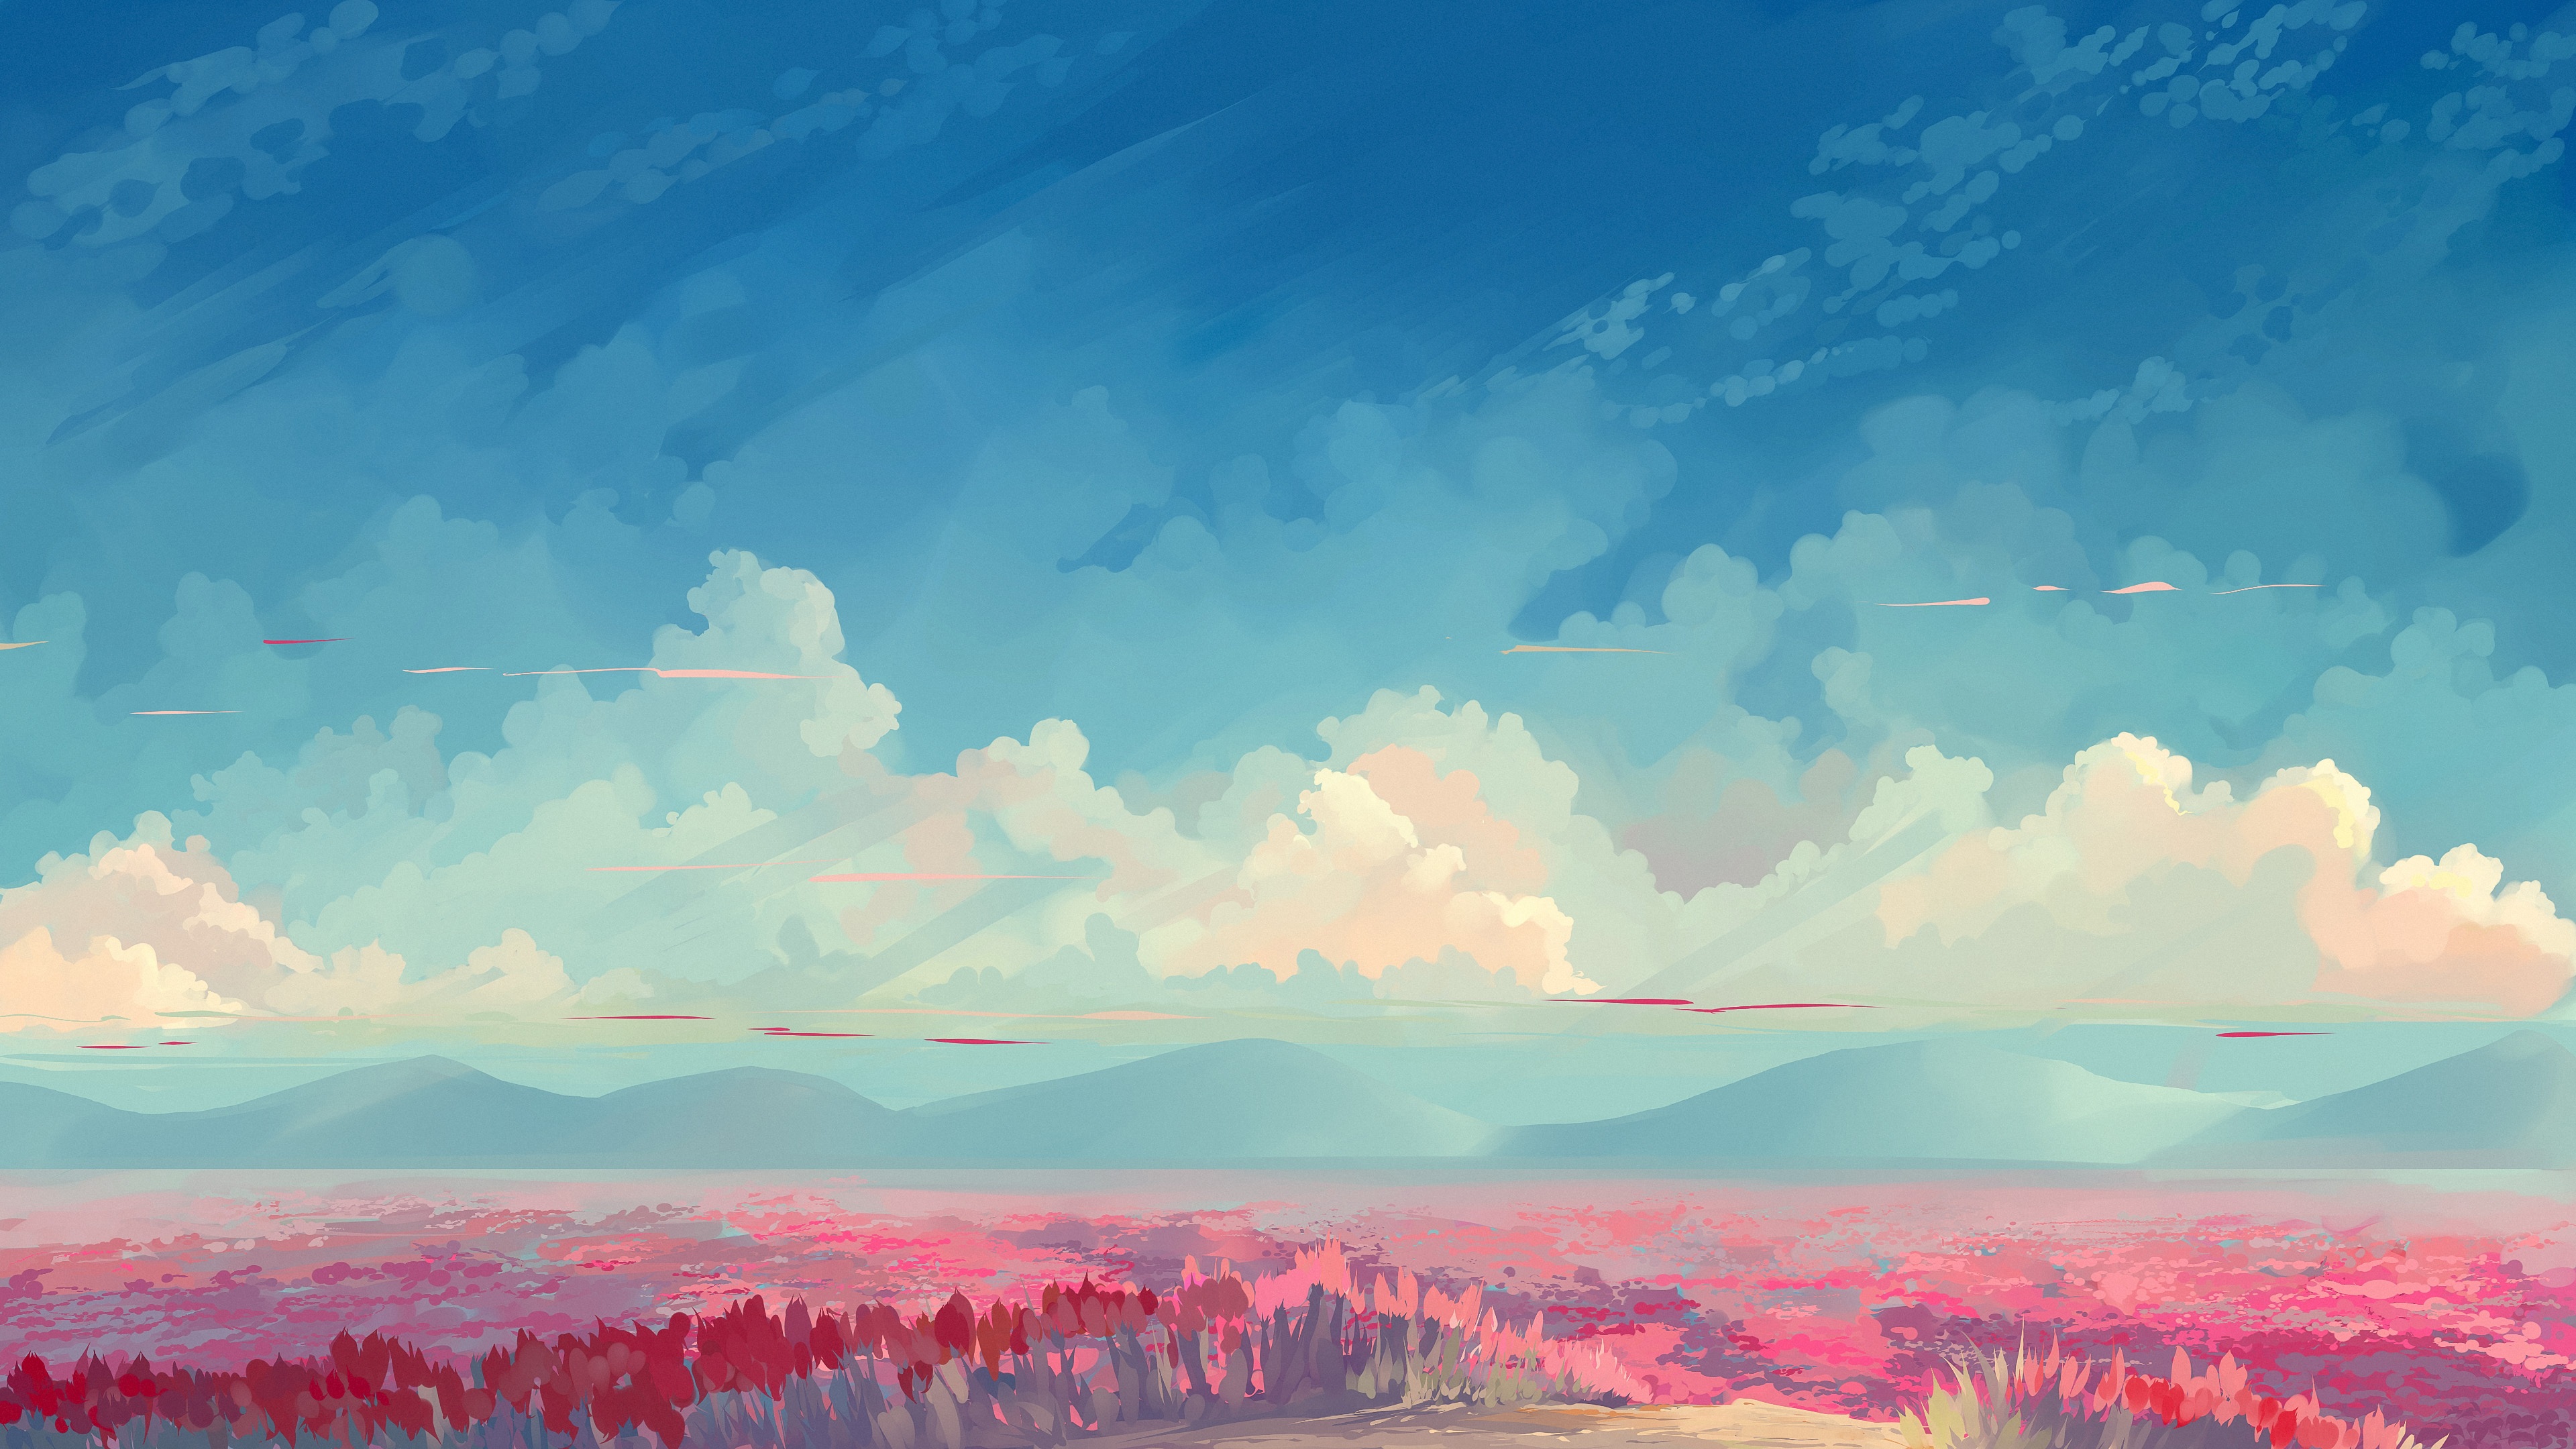 4K Anime Landscape Wallpaper and Background Image